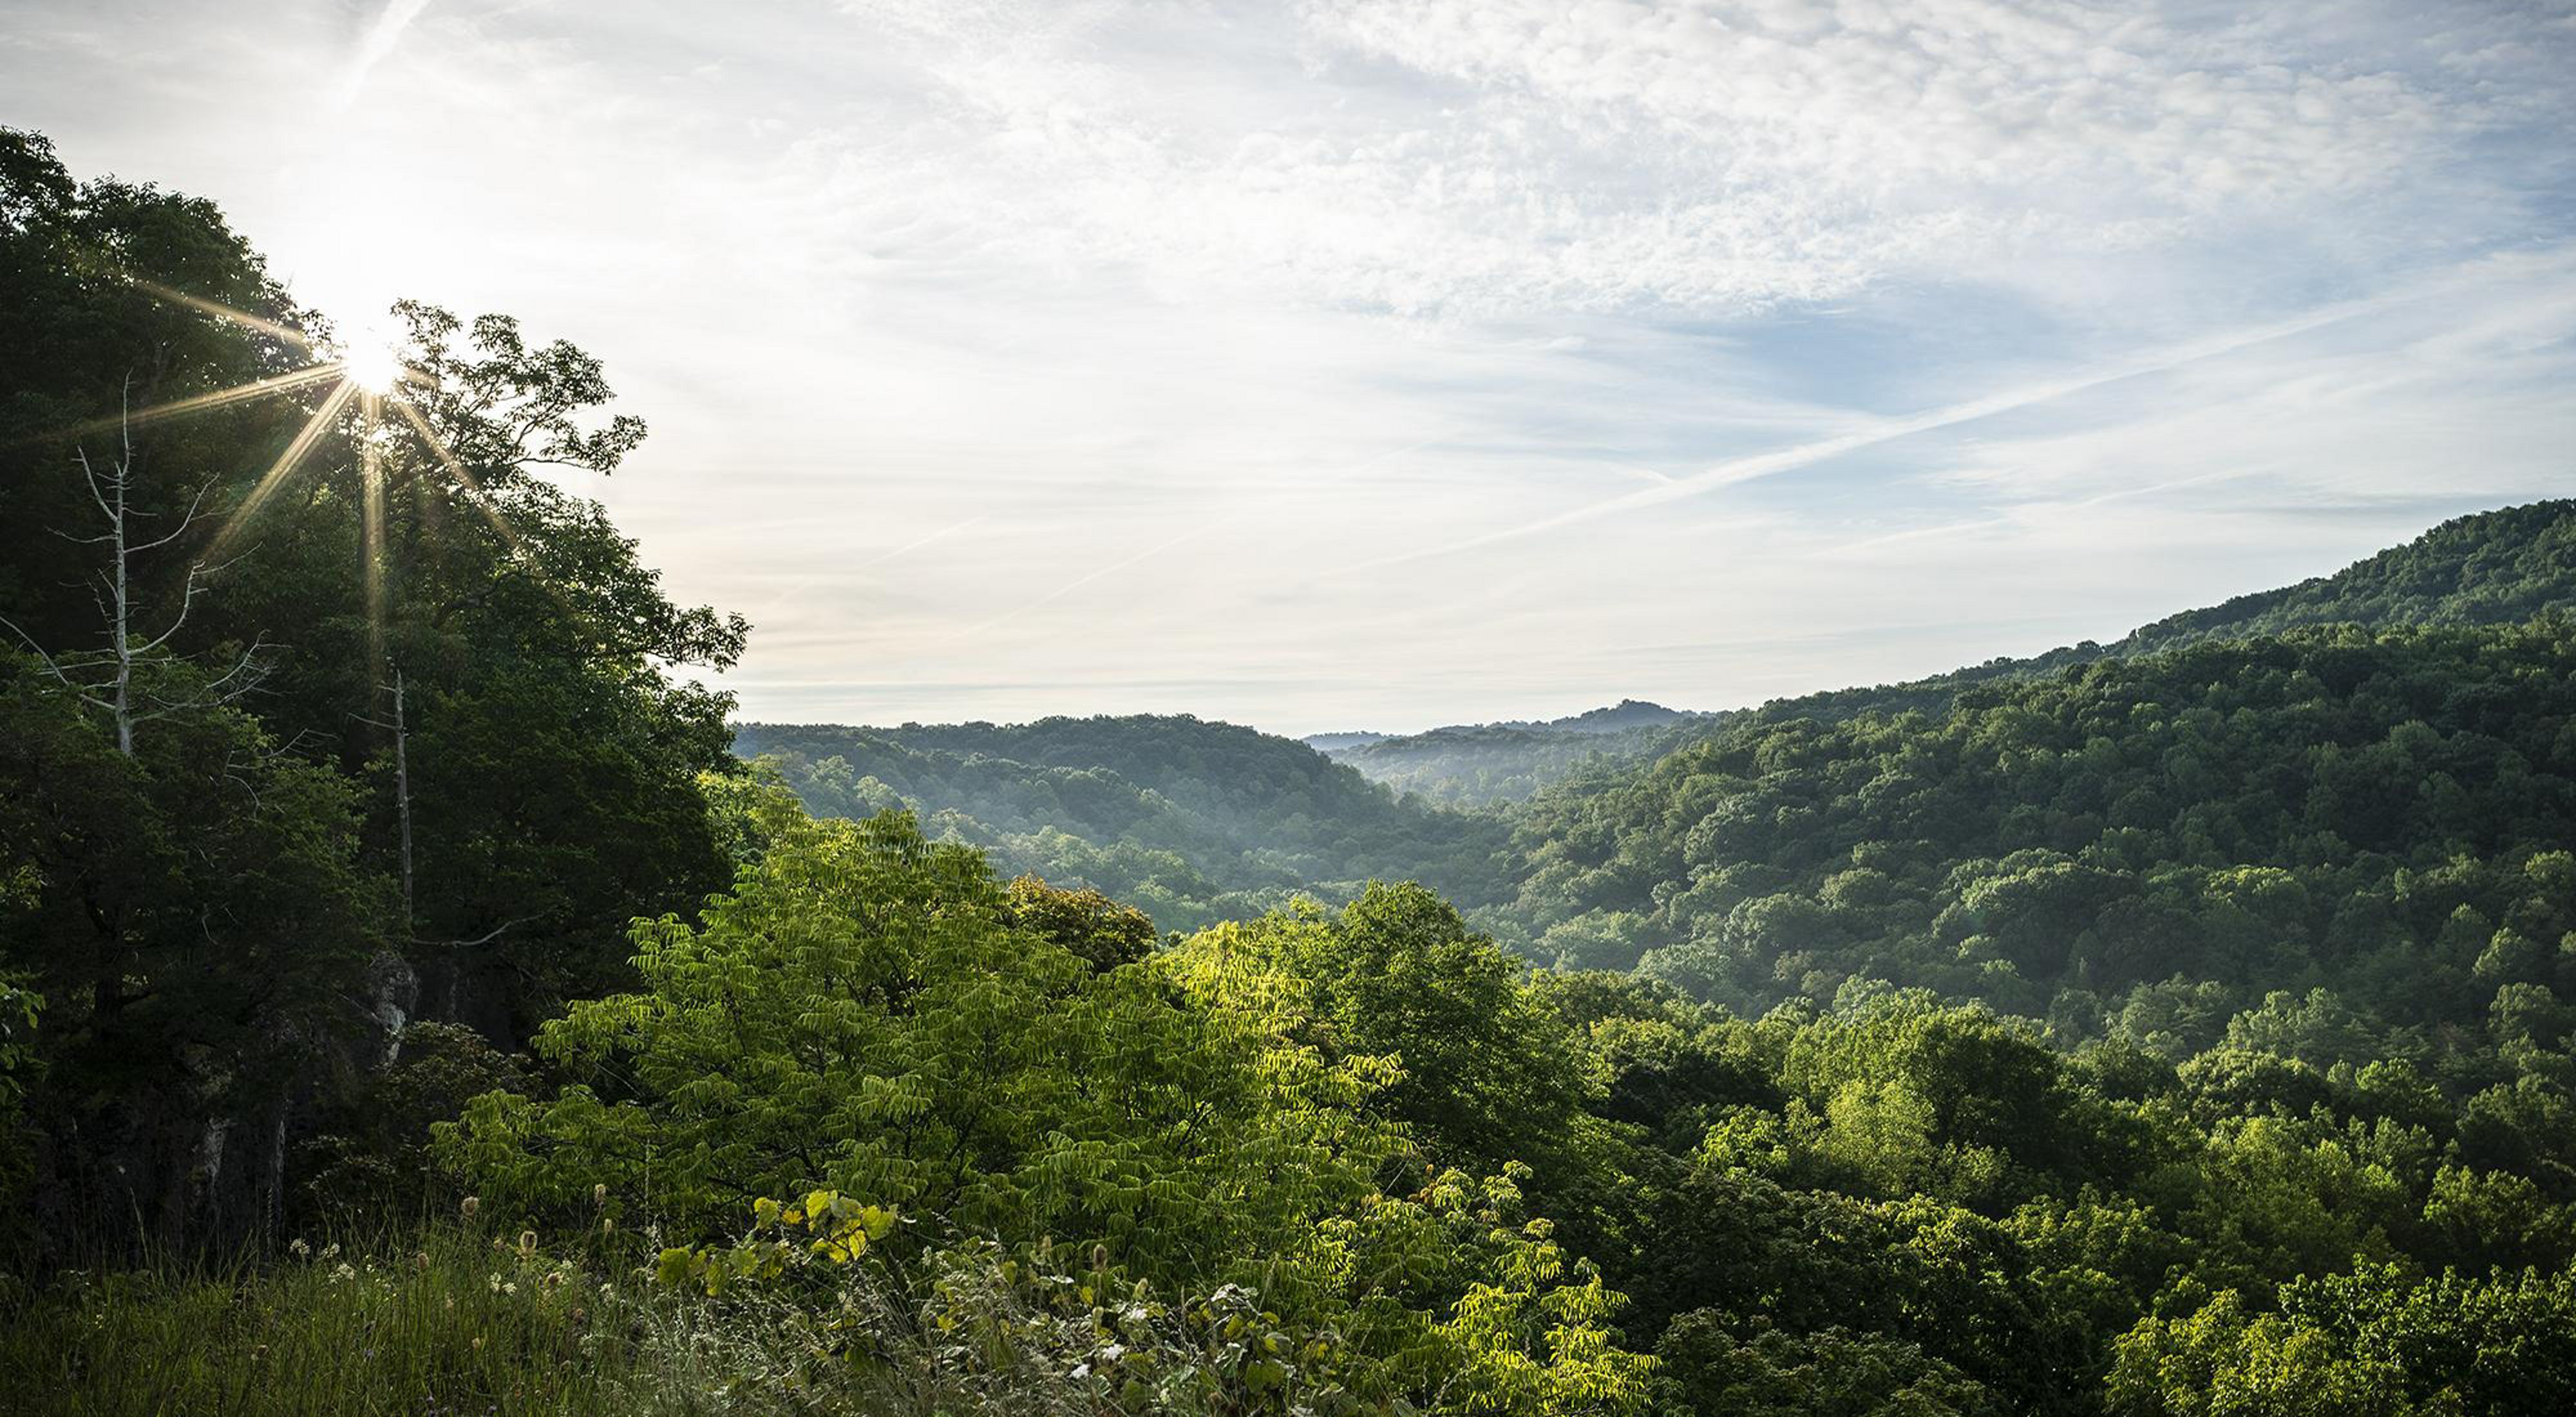 The sun shines through lush green trees at Edge of Appalachia Preserve.